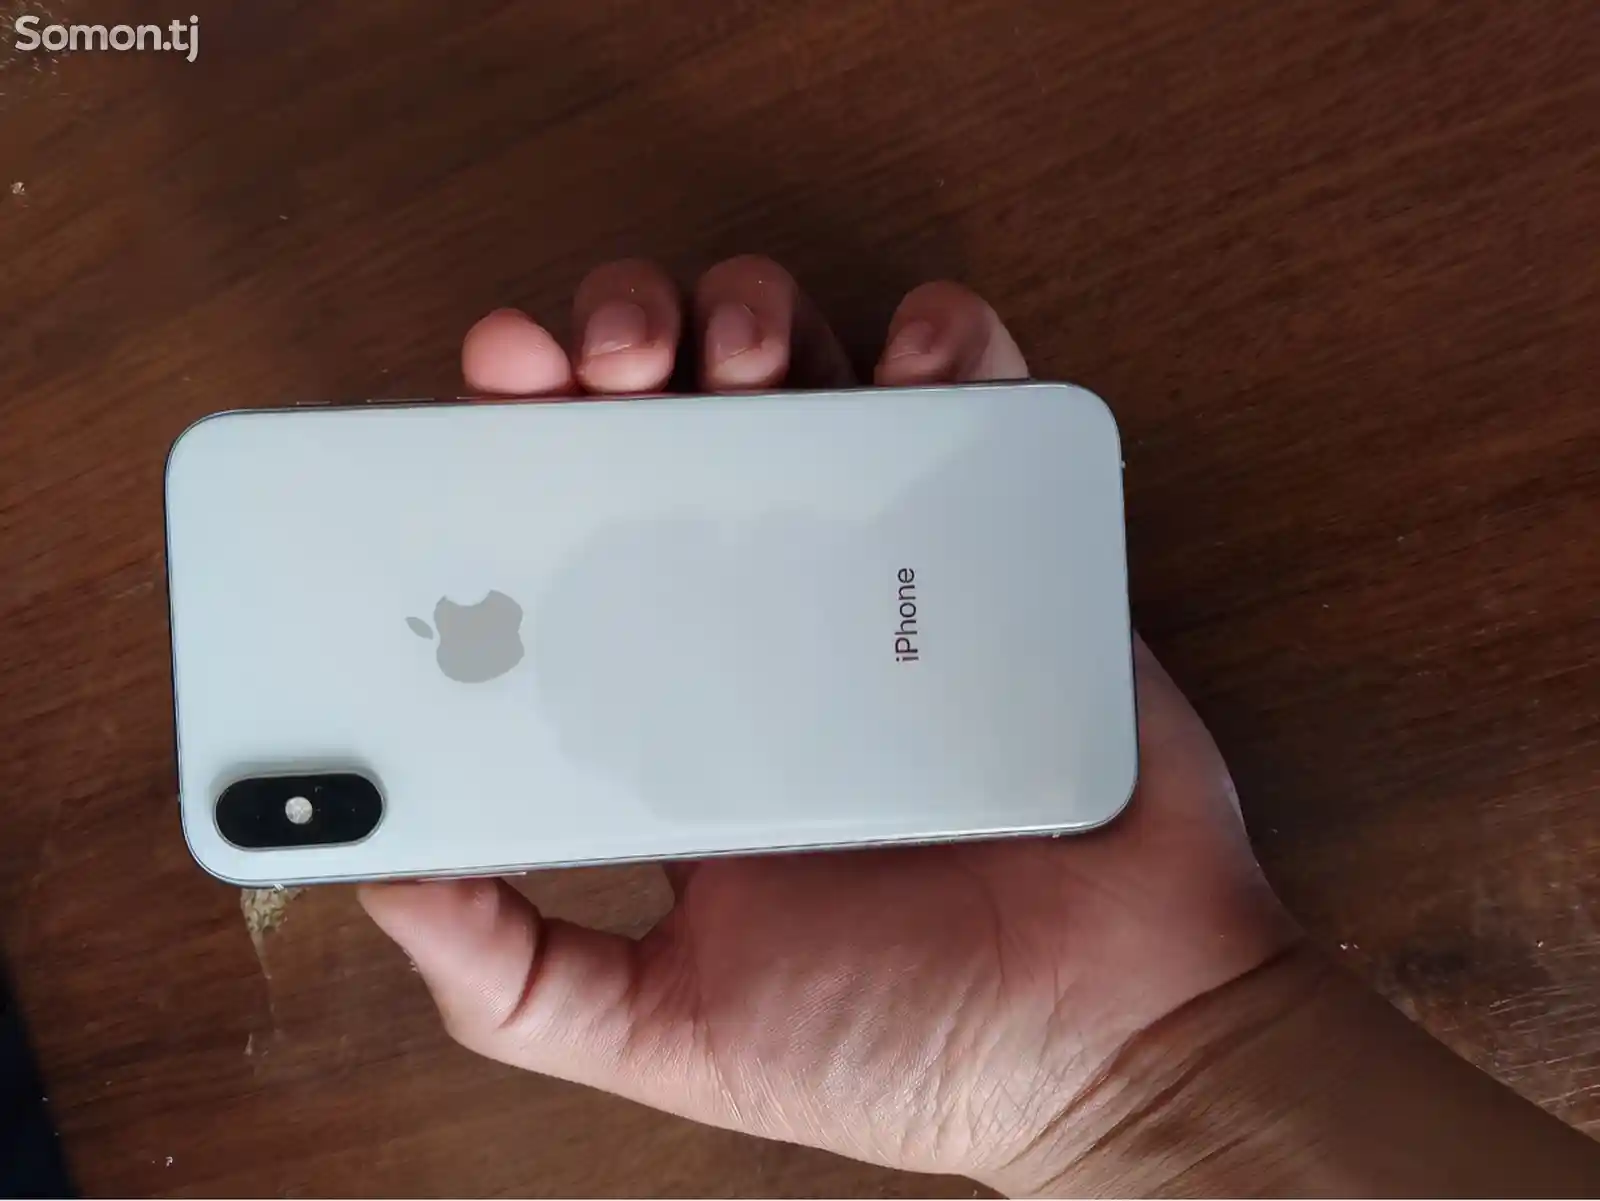 Apple iPhone Xs, 256 gb, Silver-1